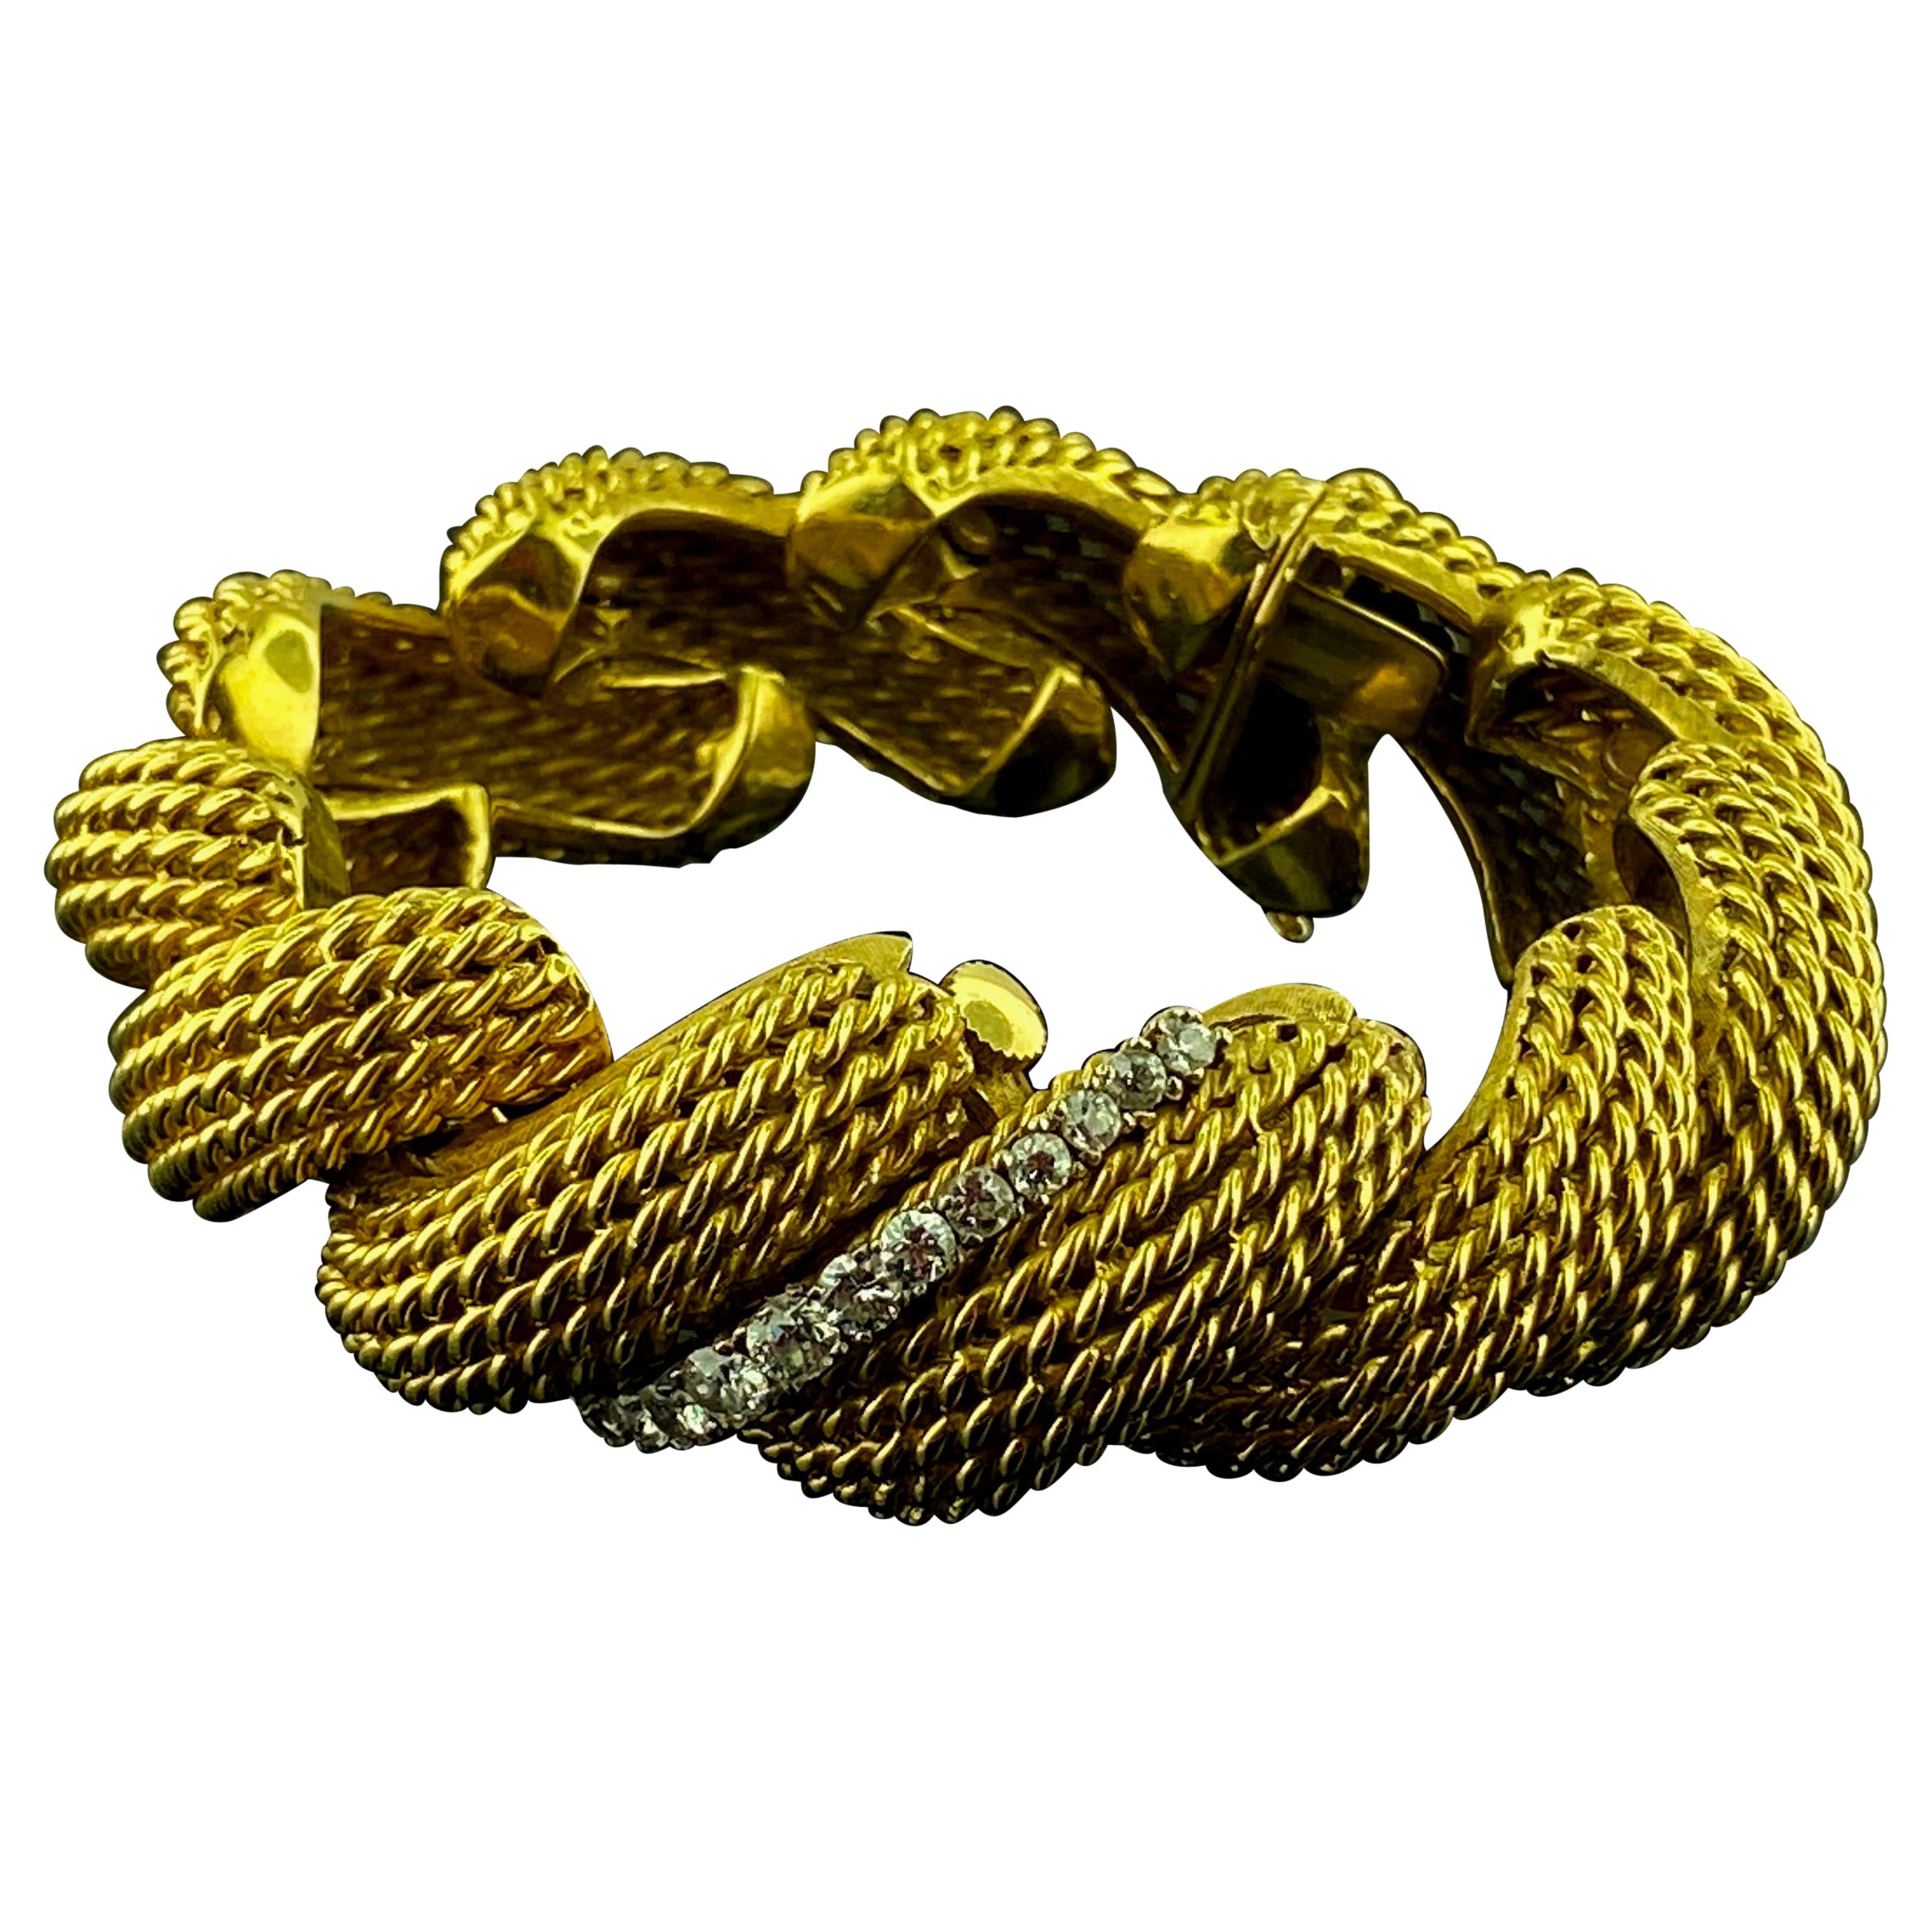 14 Karat Yellow Gold & Diamond Bracelet